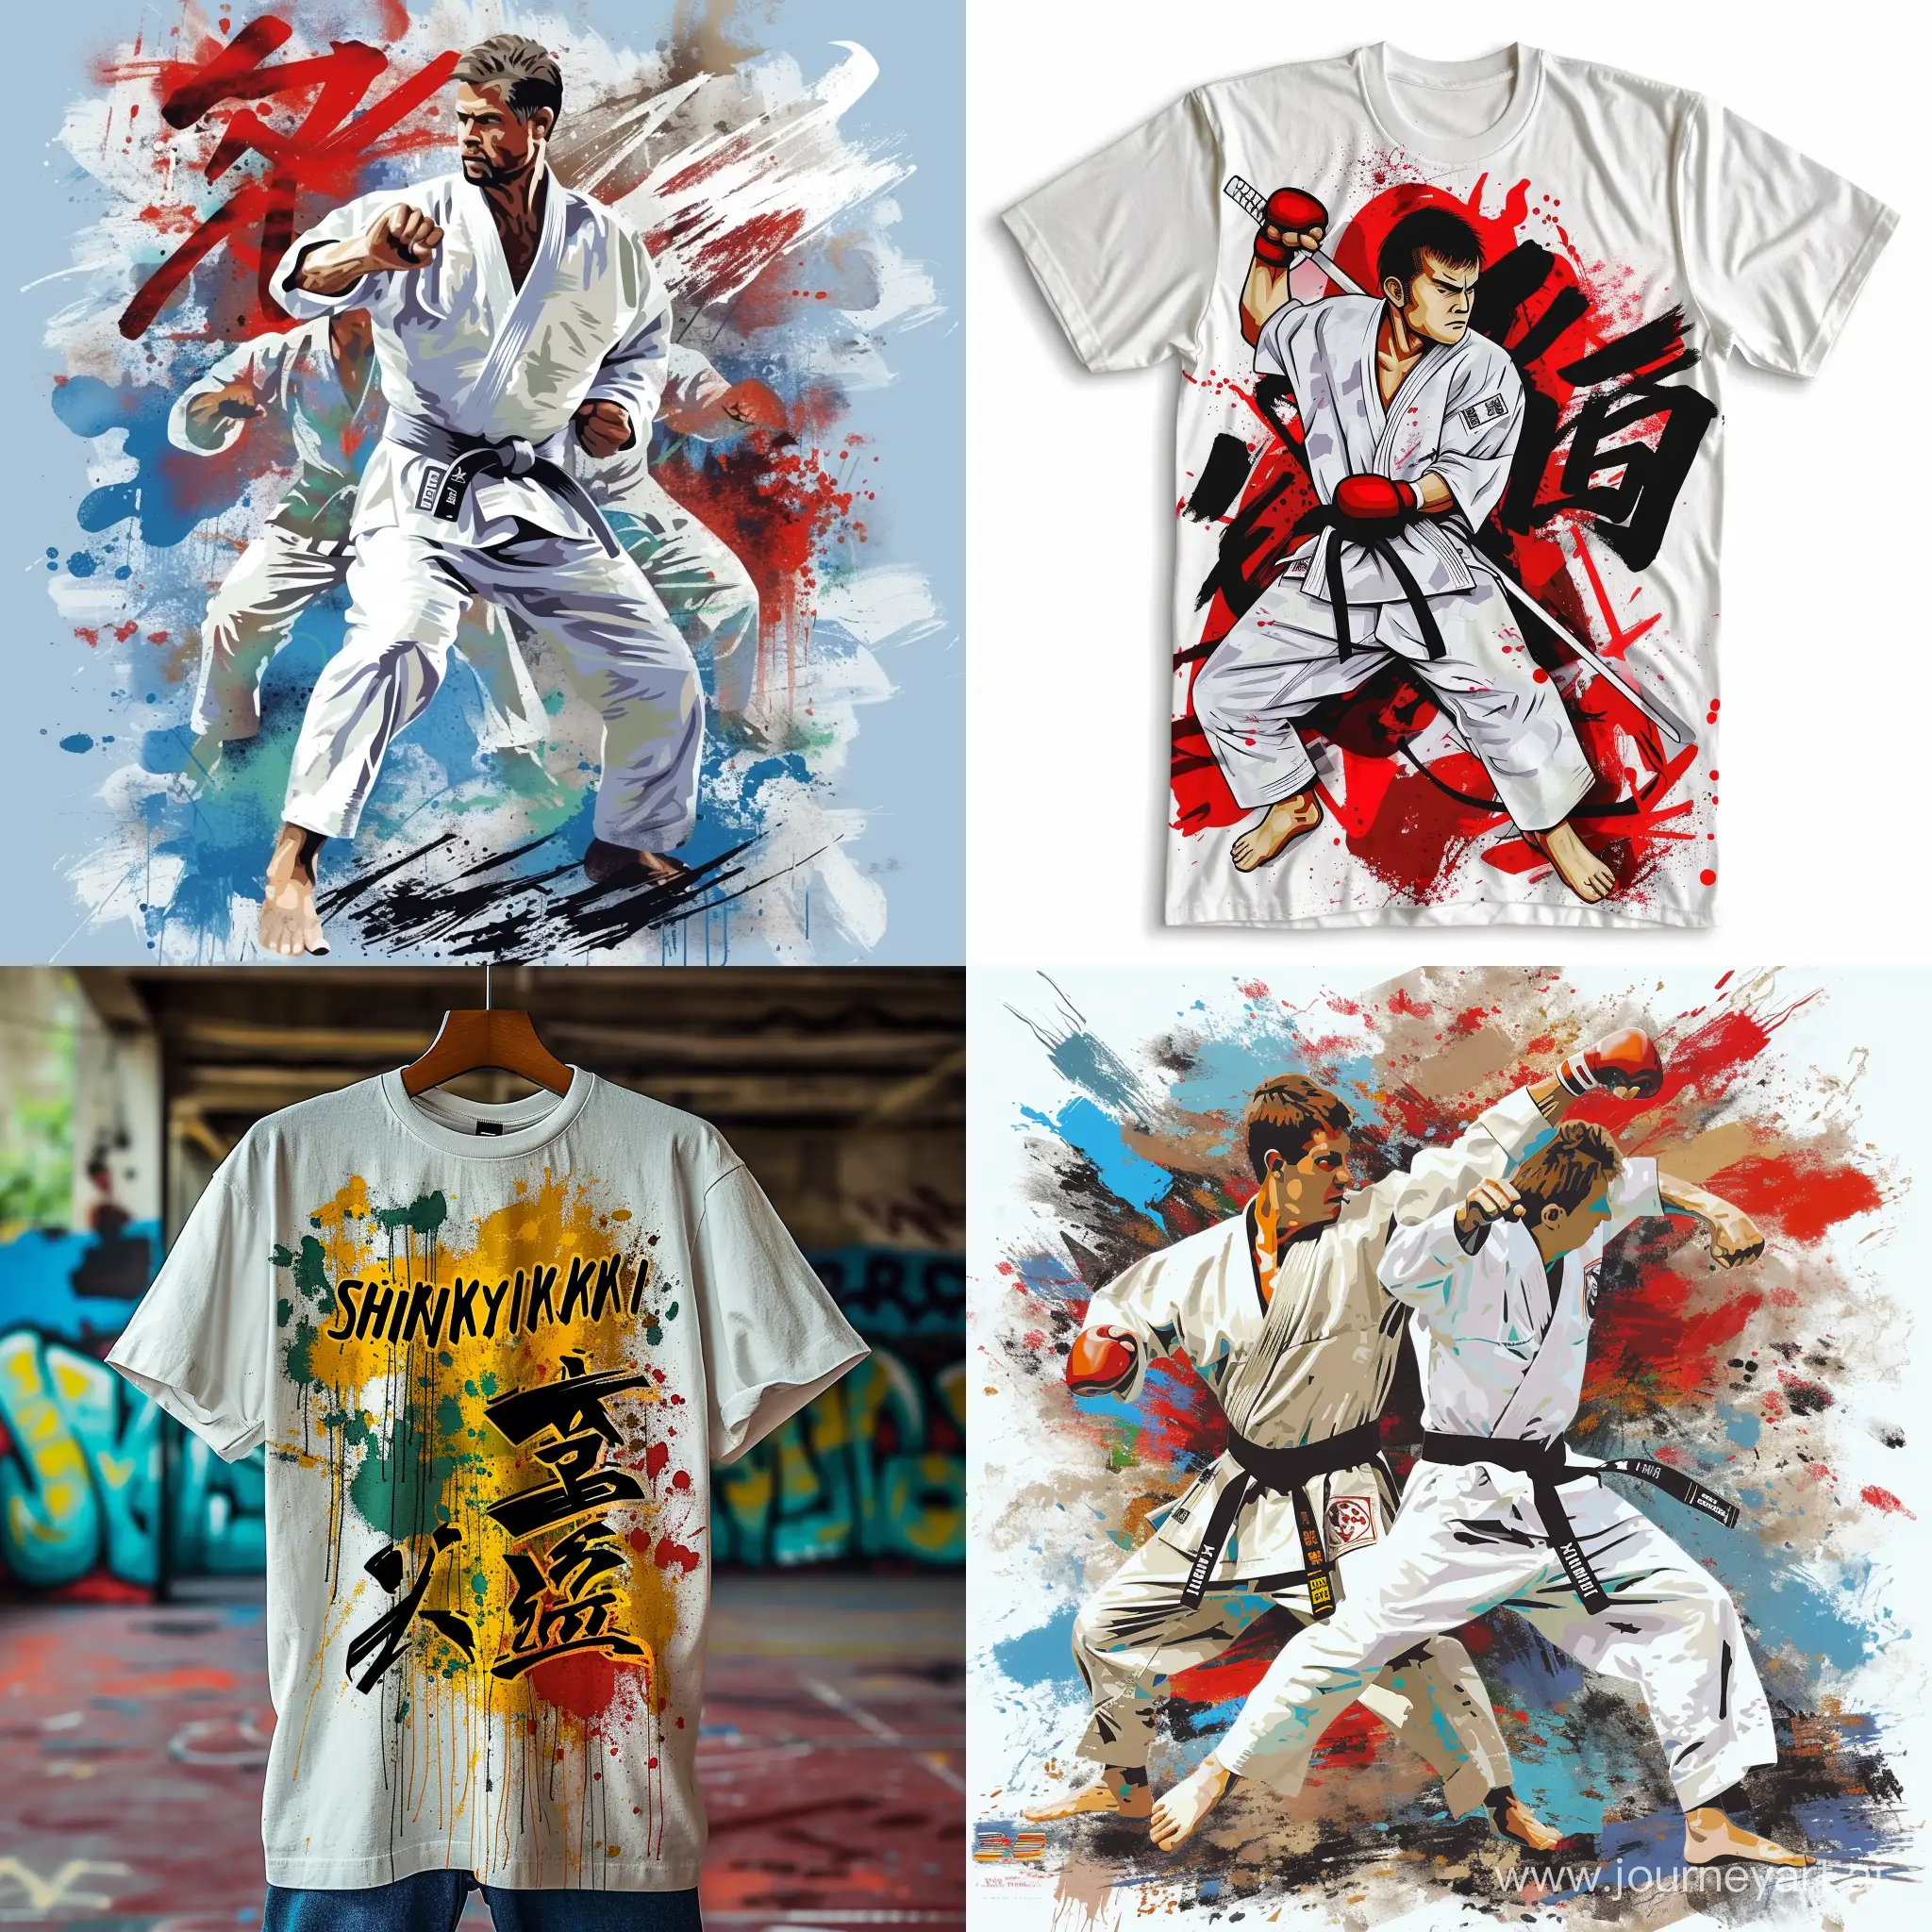 Dynamic-Shinkyokushinkai-Karate-TShirt-Design-in-Graffiti-Style